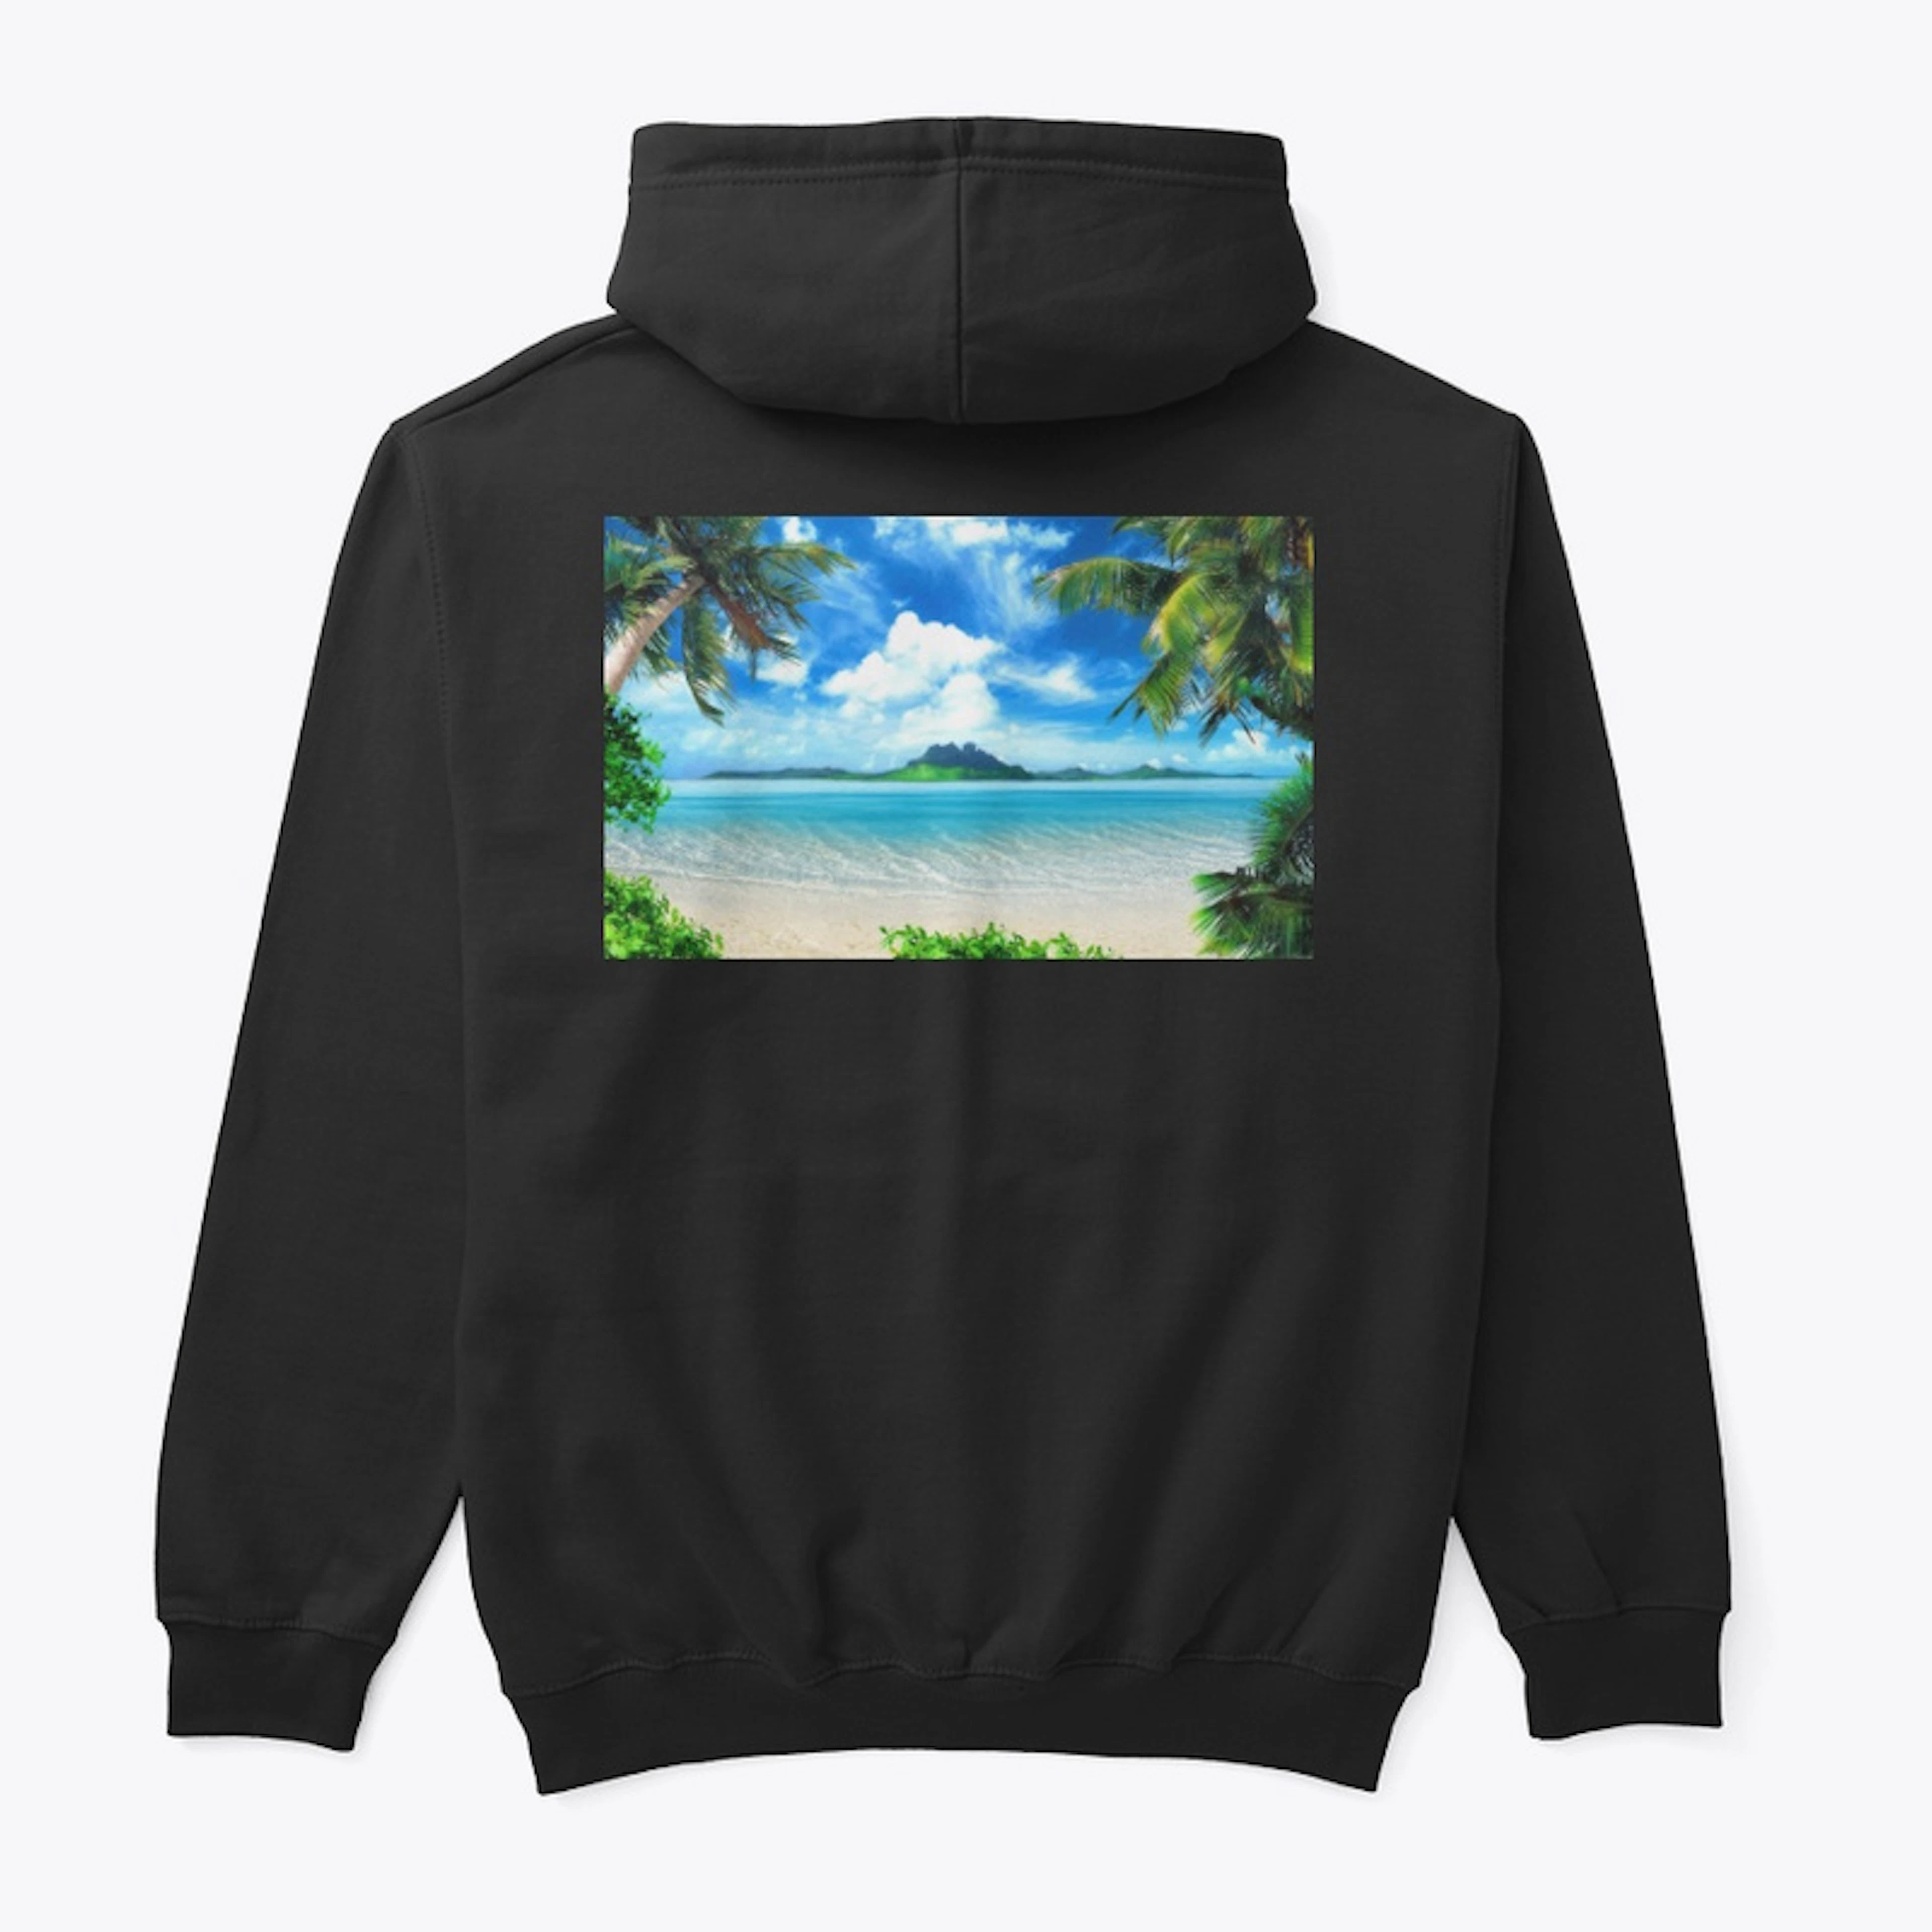 Calma beach hoodie collection